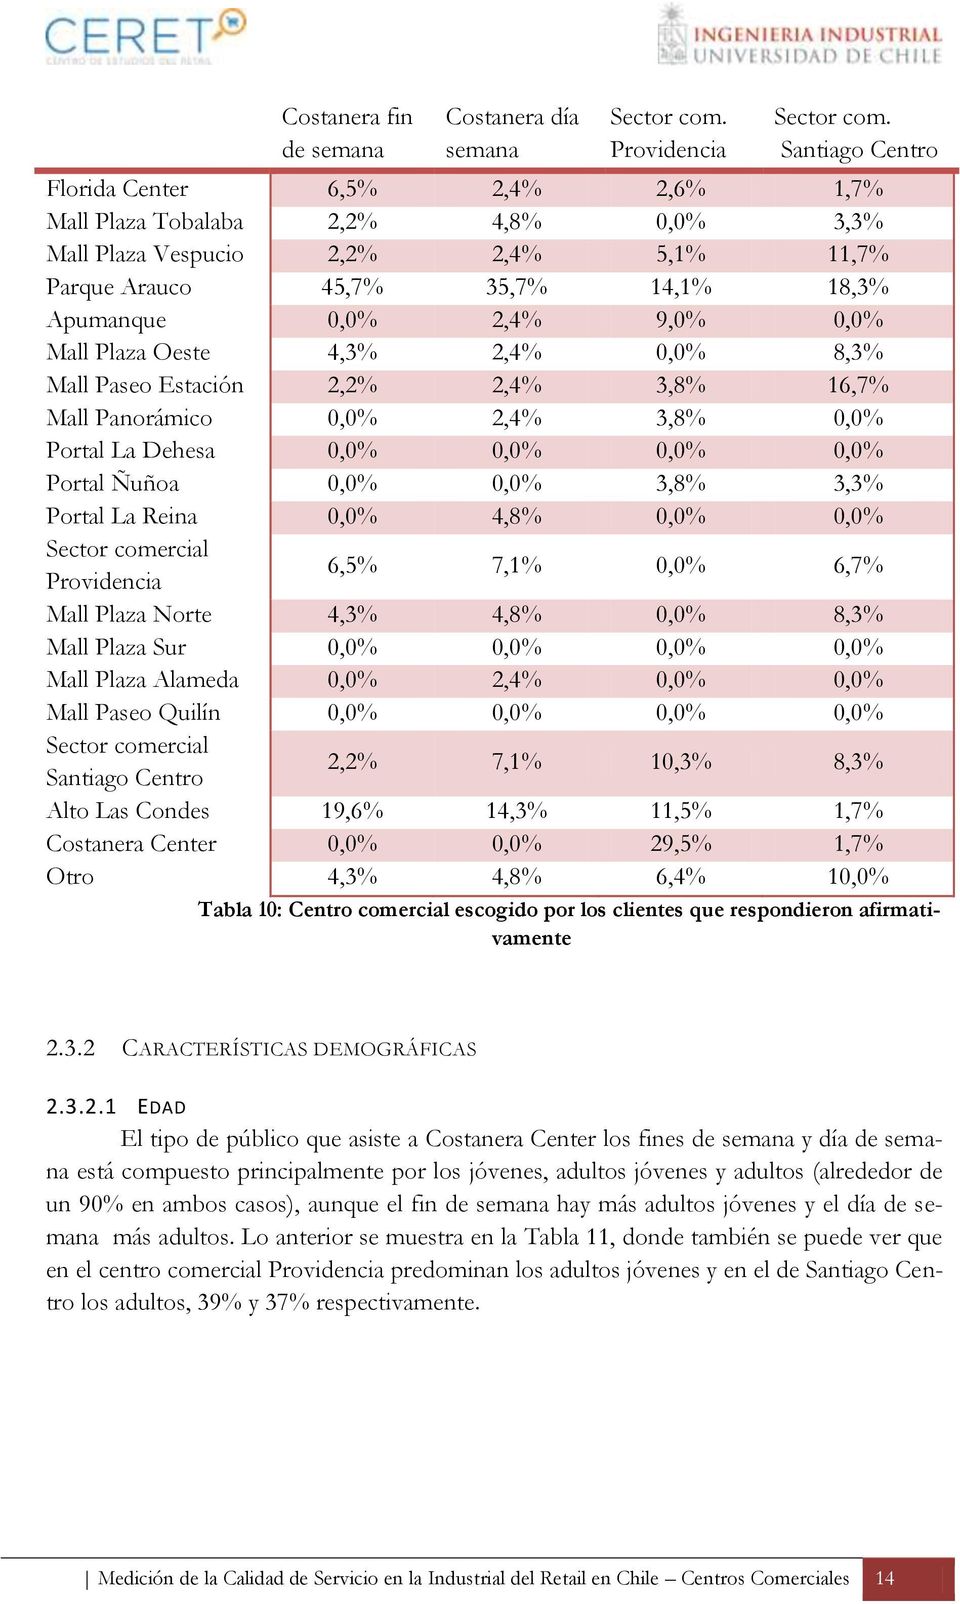 0,0% 3,8% 3,3% Portal La Reina 0,0% 4,8% 0,0% 0,0% Sector comercial 6,5% 7,1% 0,0% 6,7% Mall Plaza Norte 4,3% 4,8% 0,0% 8,3% Mall Plaza Sur 0,0% 0,0% 0,0% 0,0% Mall Plaza Alameda 0,0% 2,4% 0,0% 0,0%